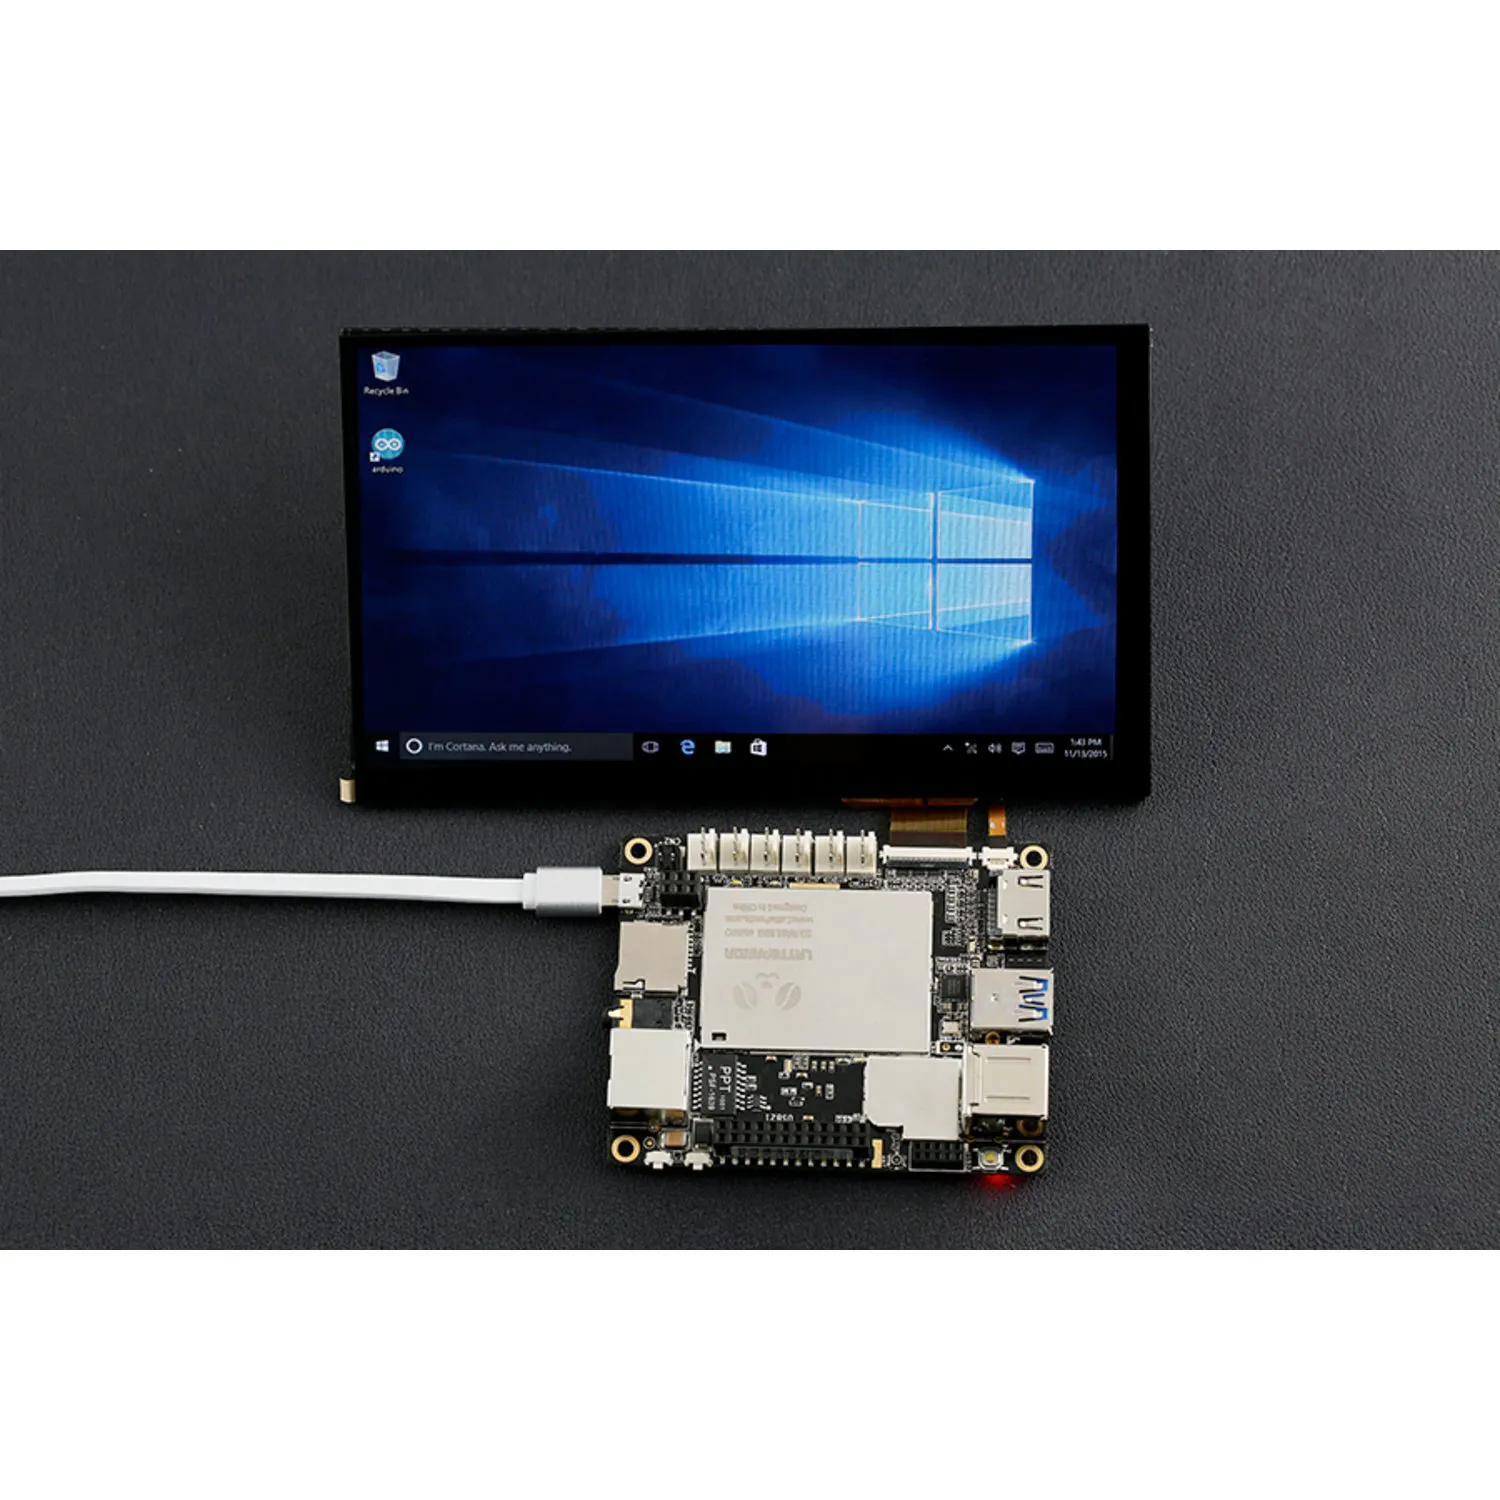 Photo of LattePanda Windows 10 Mini PC (2G/32GB) - A Powerful Windows 10 Mini PC